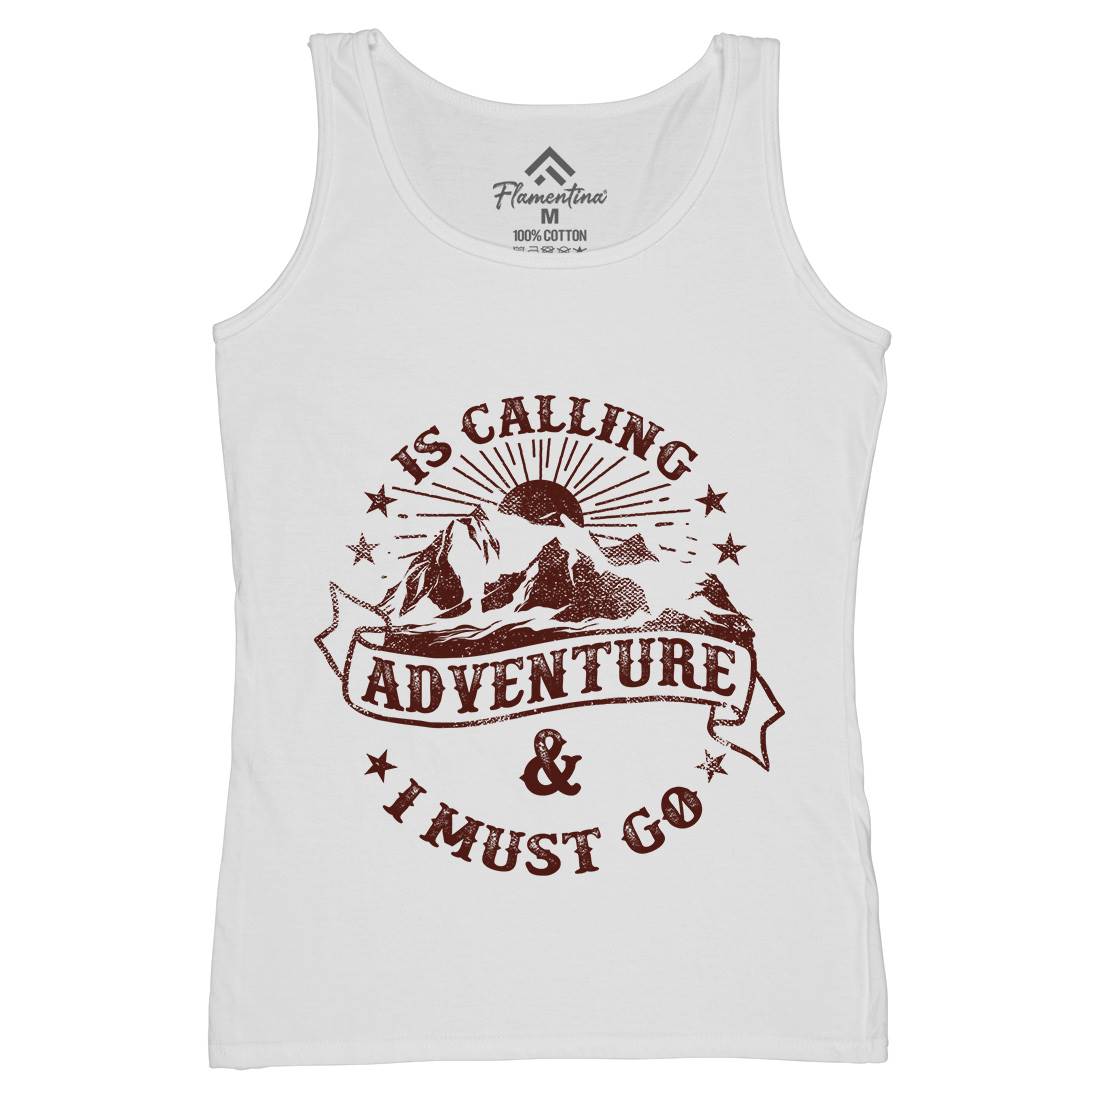 Is Calling Adventure Womens Organic Tank Top Vest Nature C954